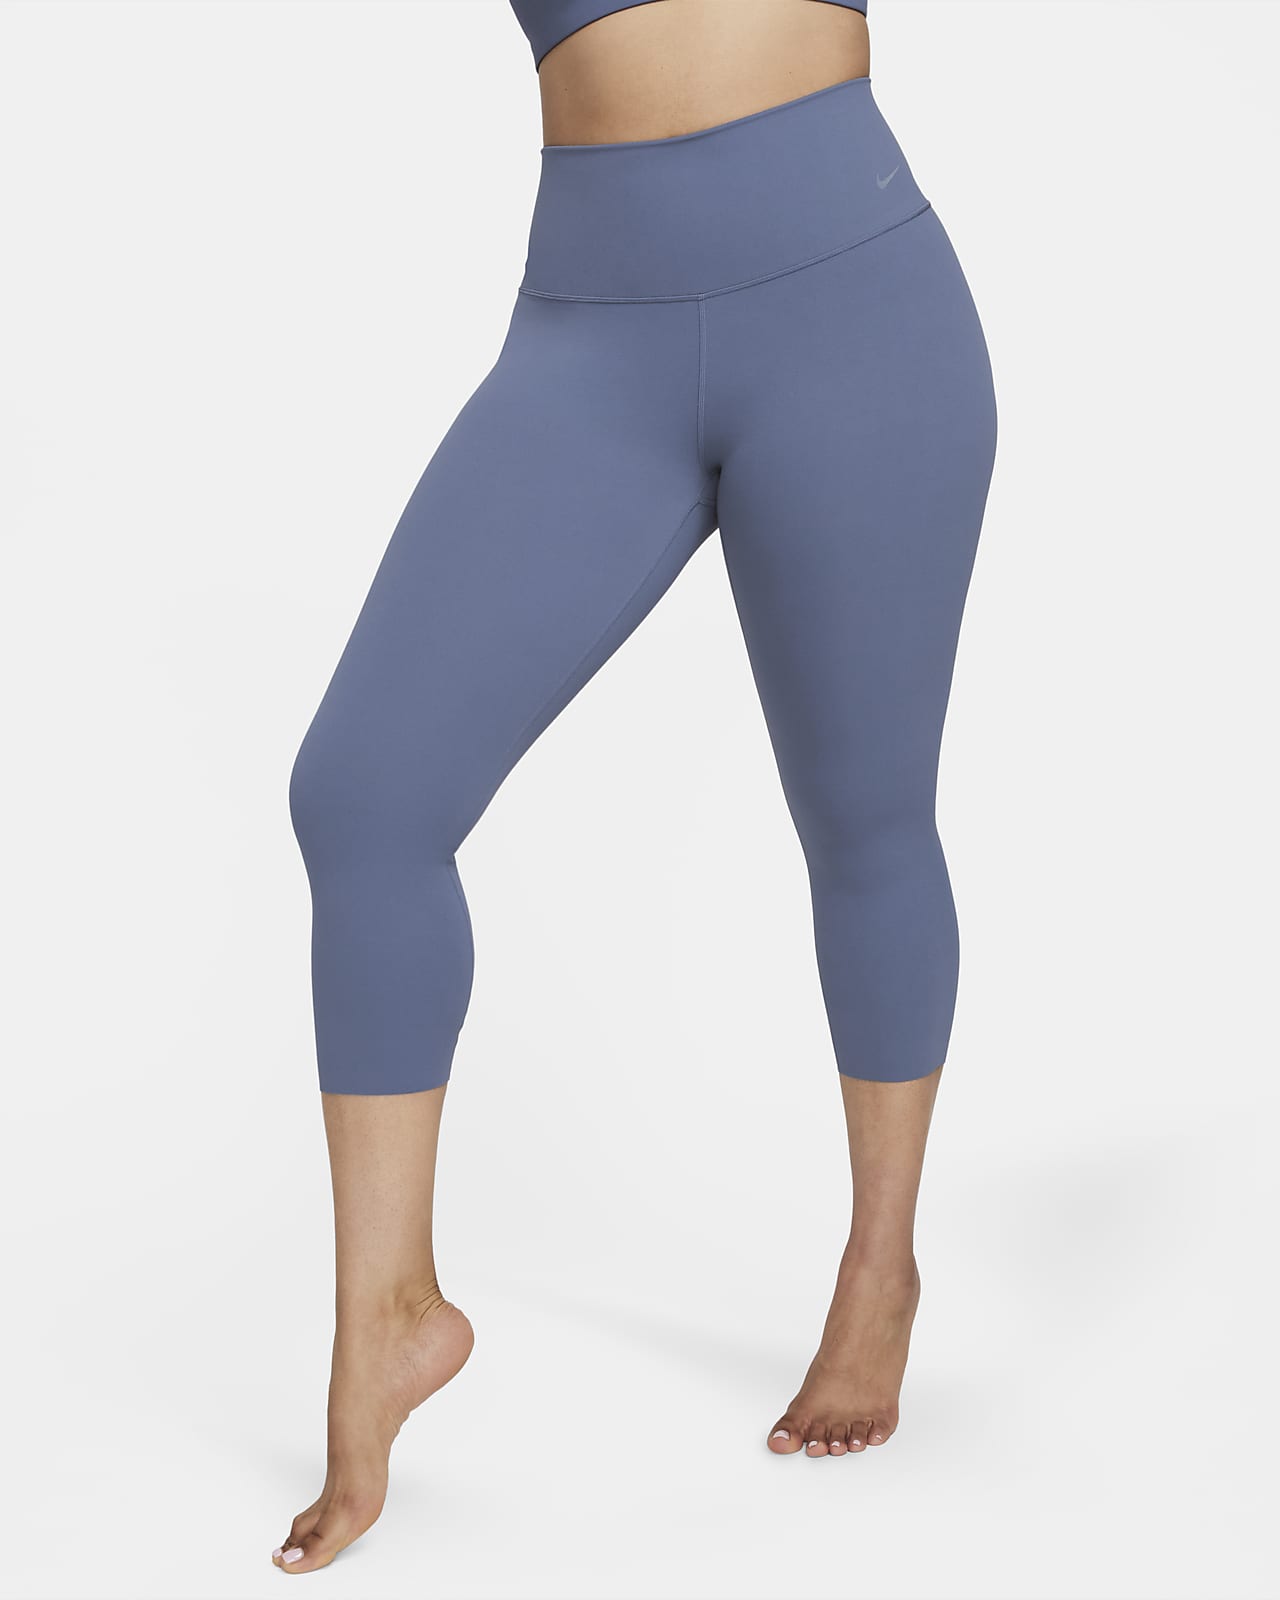 Zenvy Women's Gentle-Support High-Waisted Cropped Leggings. Nike.com